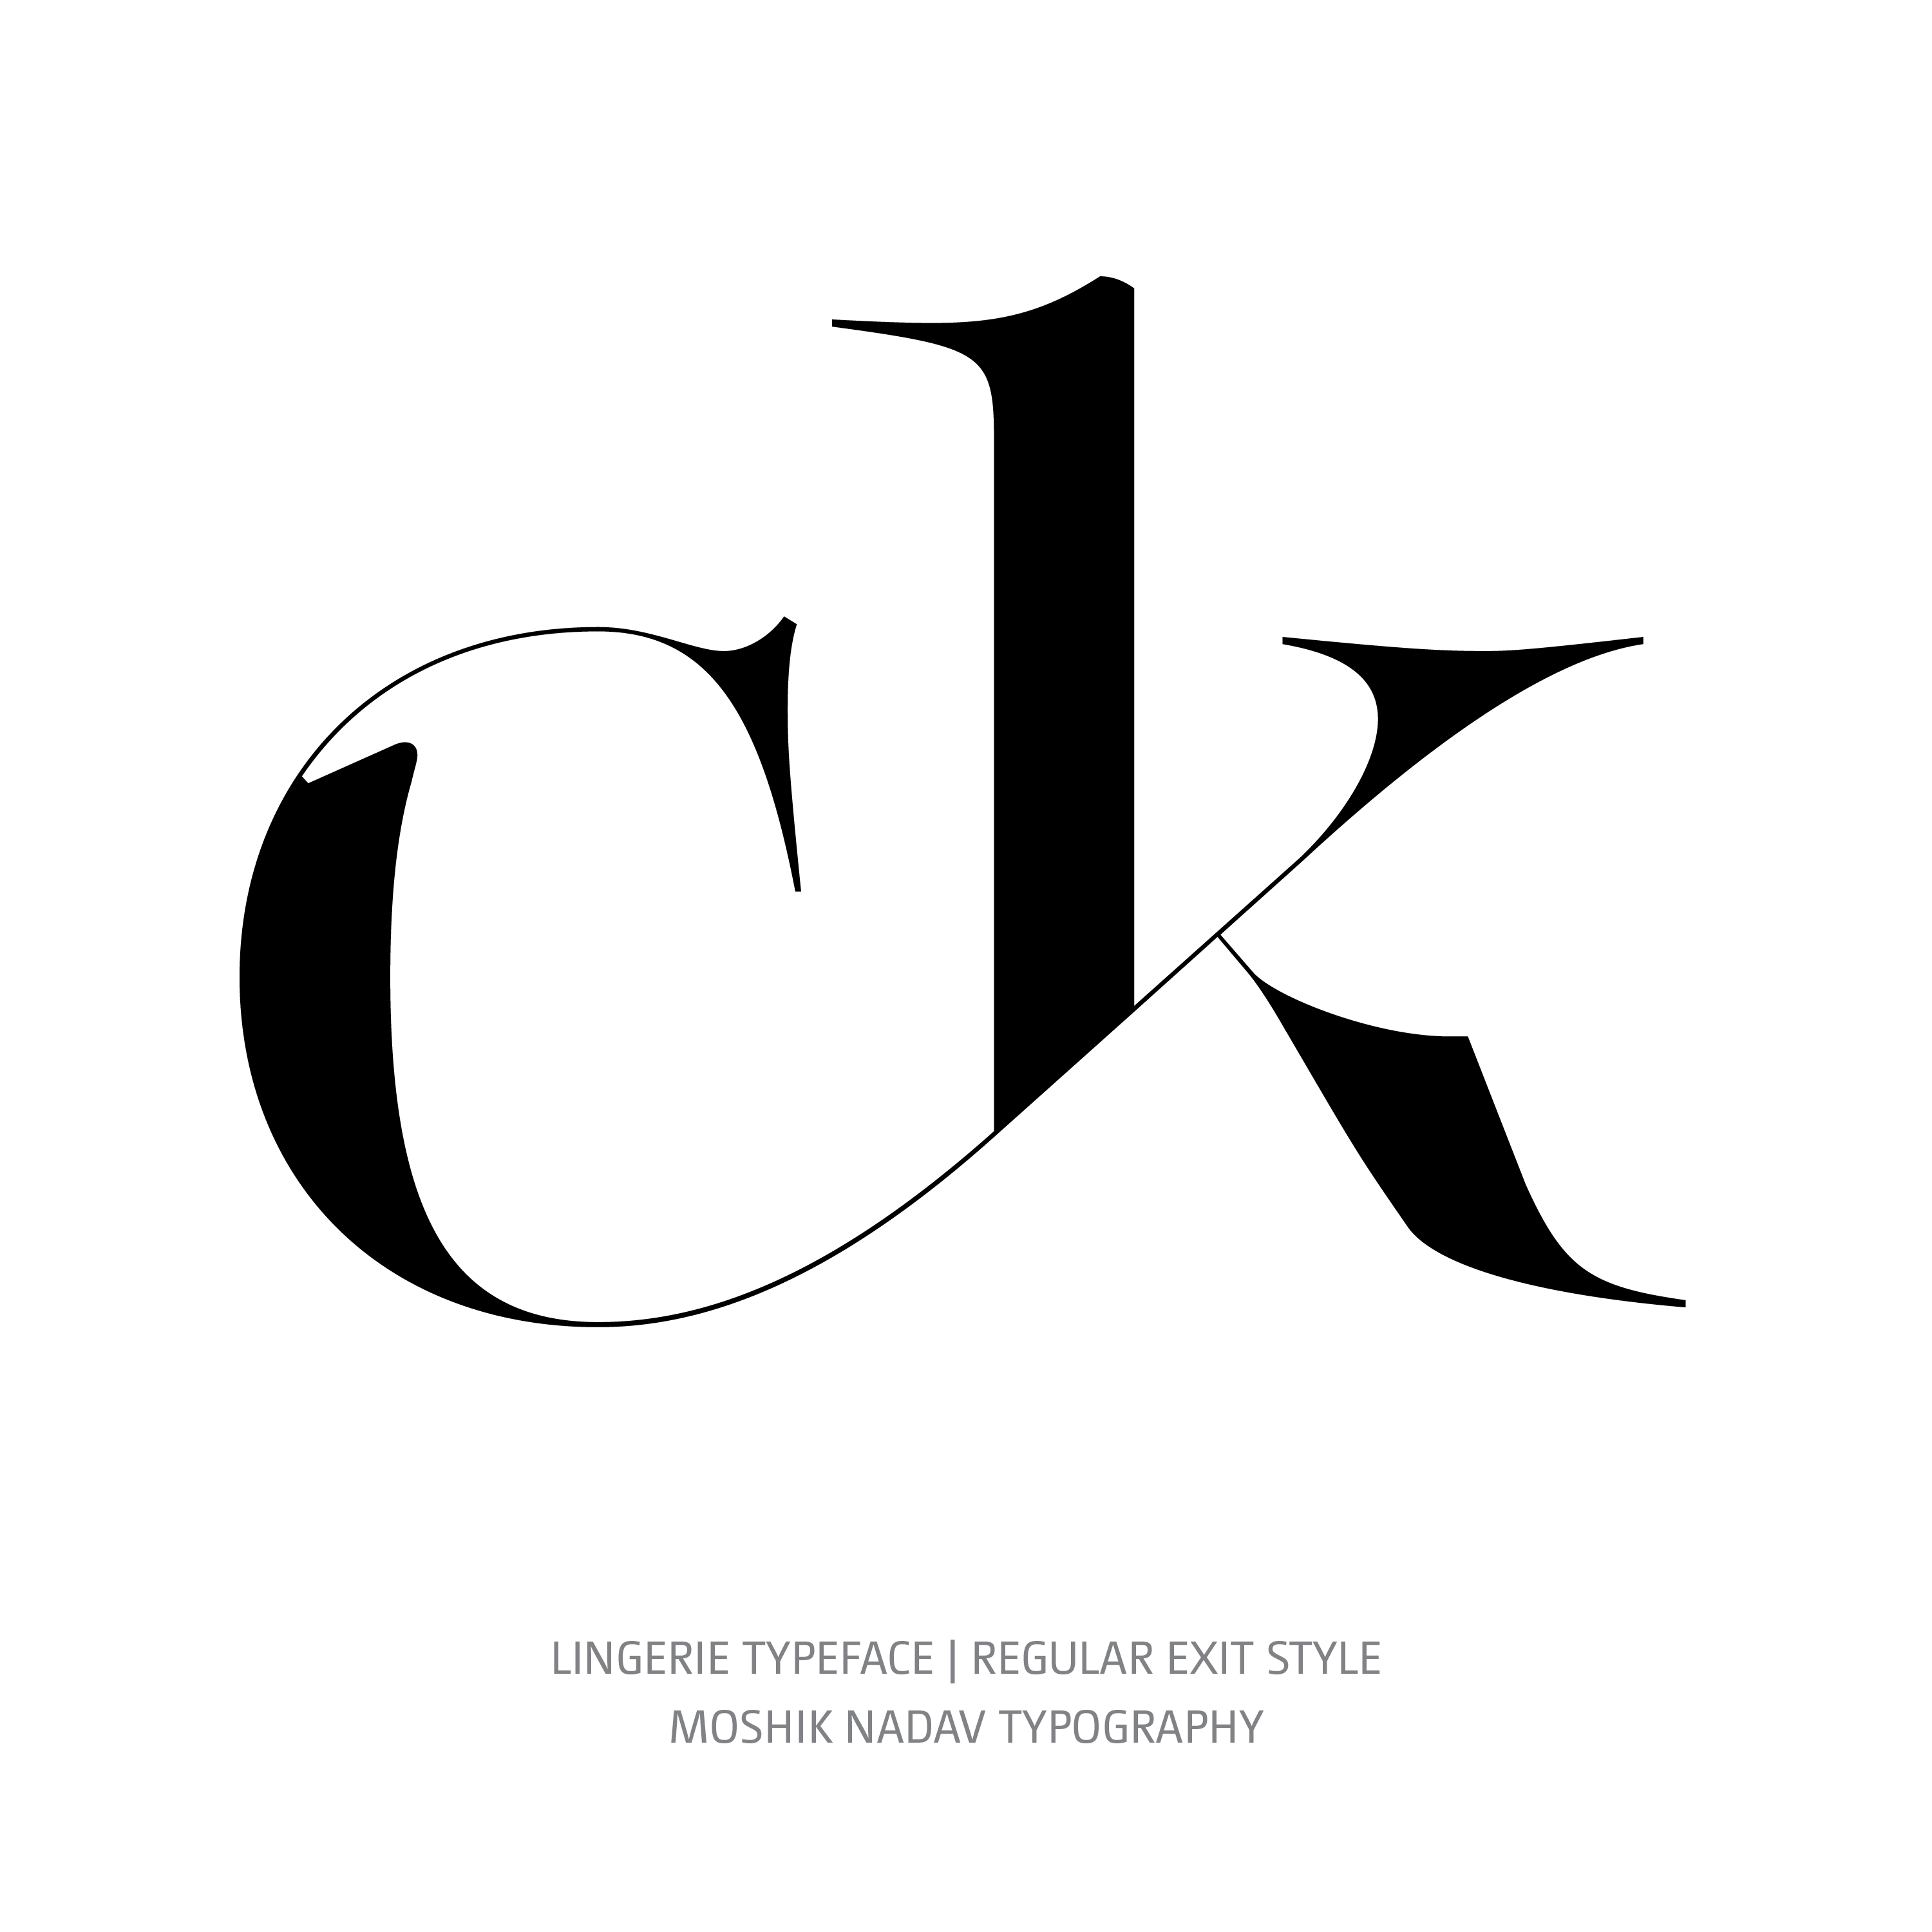 Lingerie Typeface Regular Exit ck ligature glyph